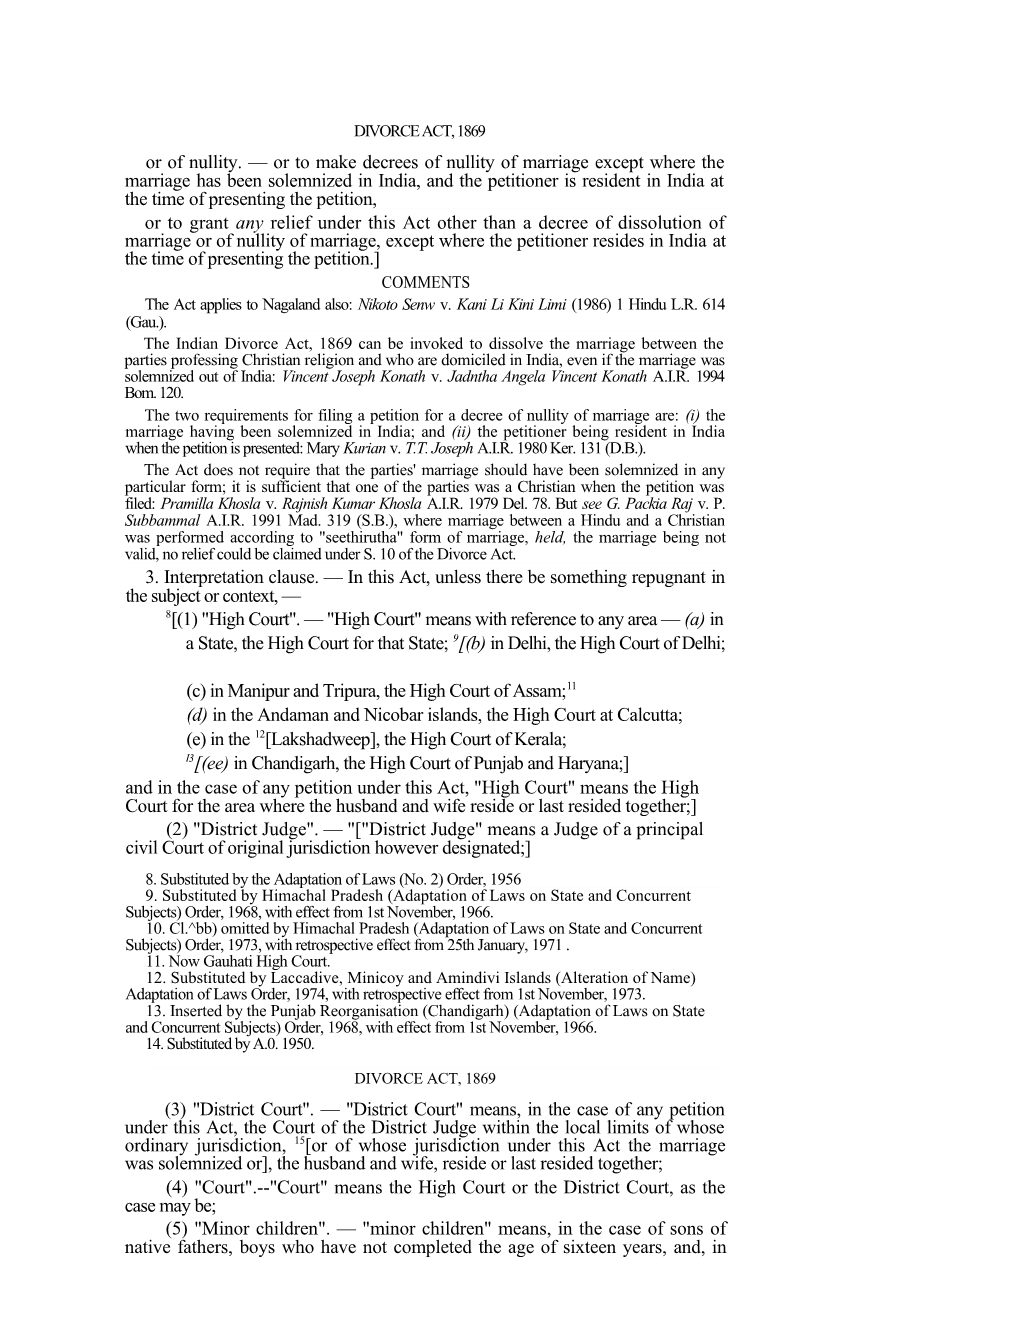 The Act Applies to Nagaland Also: Nikoto Senw V. Kani Li Kini Limi (1986) 1 Hindu L.R